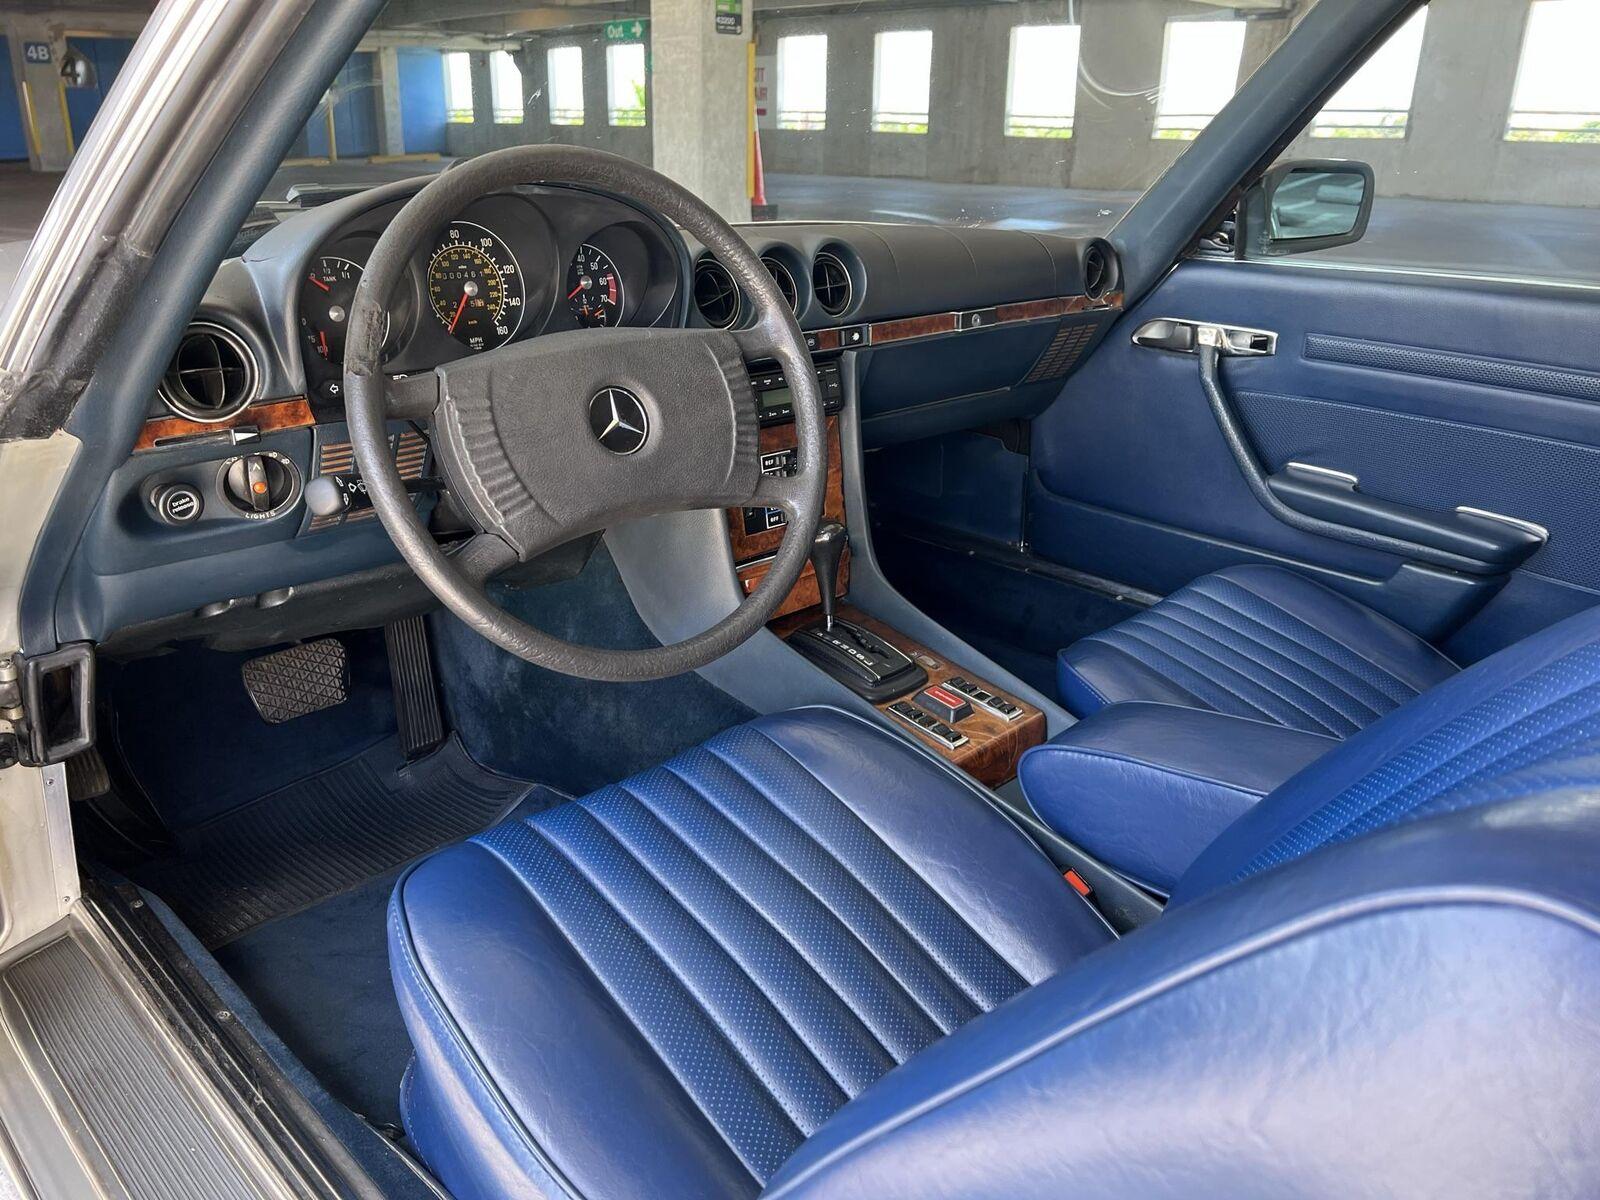 1979 Mercedes Benz 450 Slc Recent Restoration Spectacular Condition For Sale 2022 11 06 16 